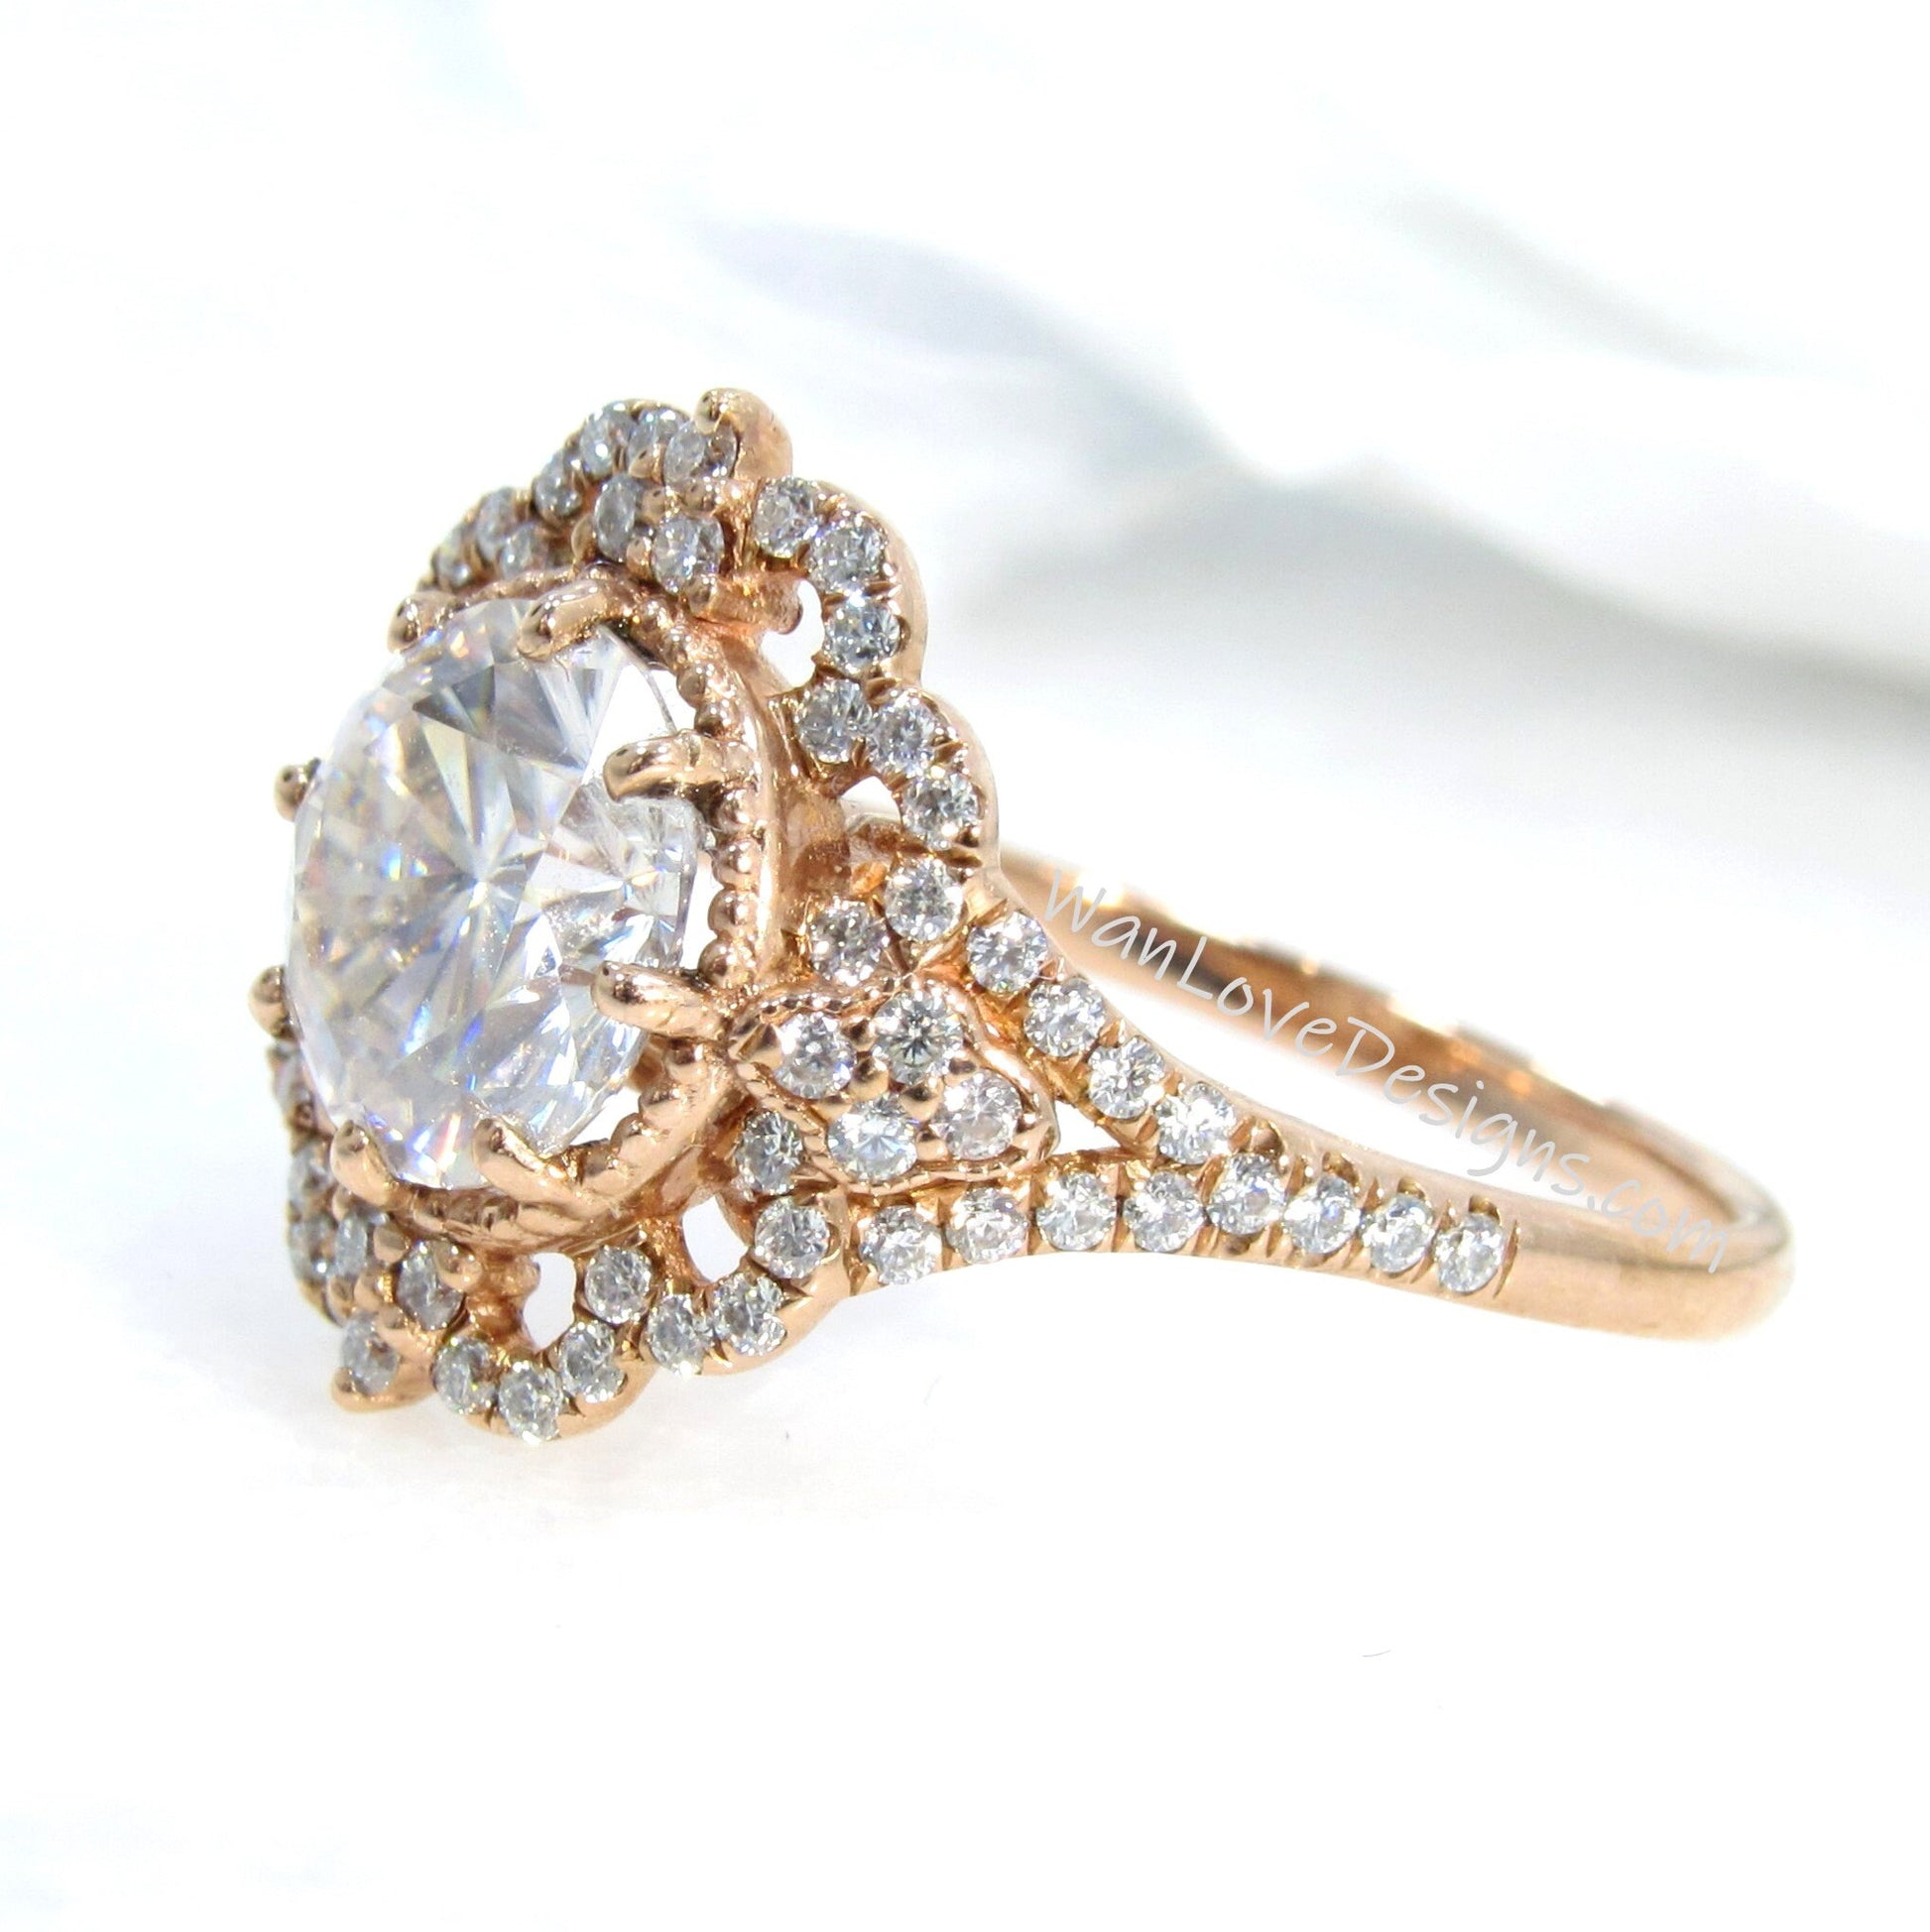 Vintage round shape alexandrite engagement ring ornate halo moissanite diamond ring rose gold ring 8 prong set ring anniversary ring gift